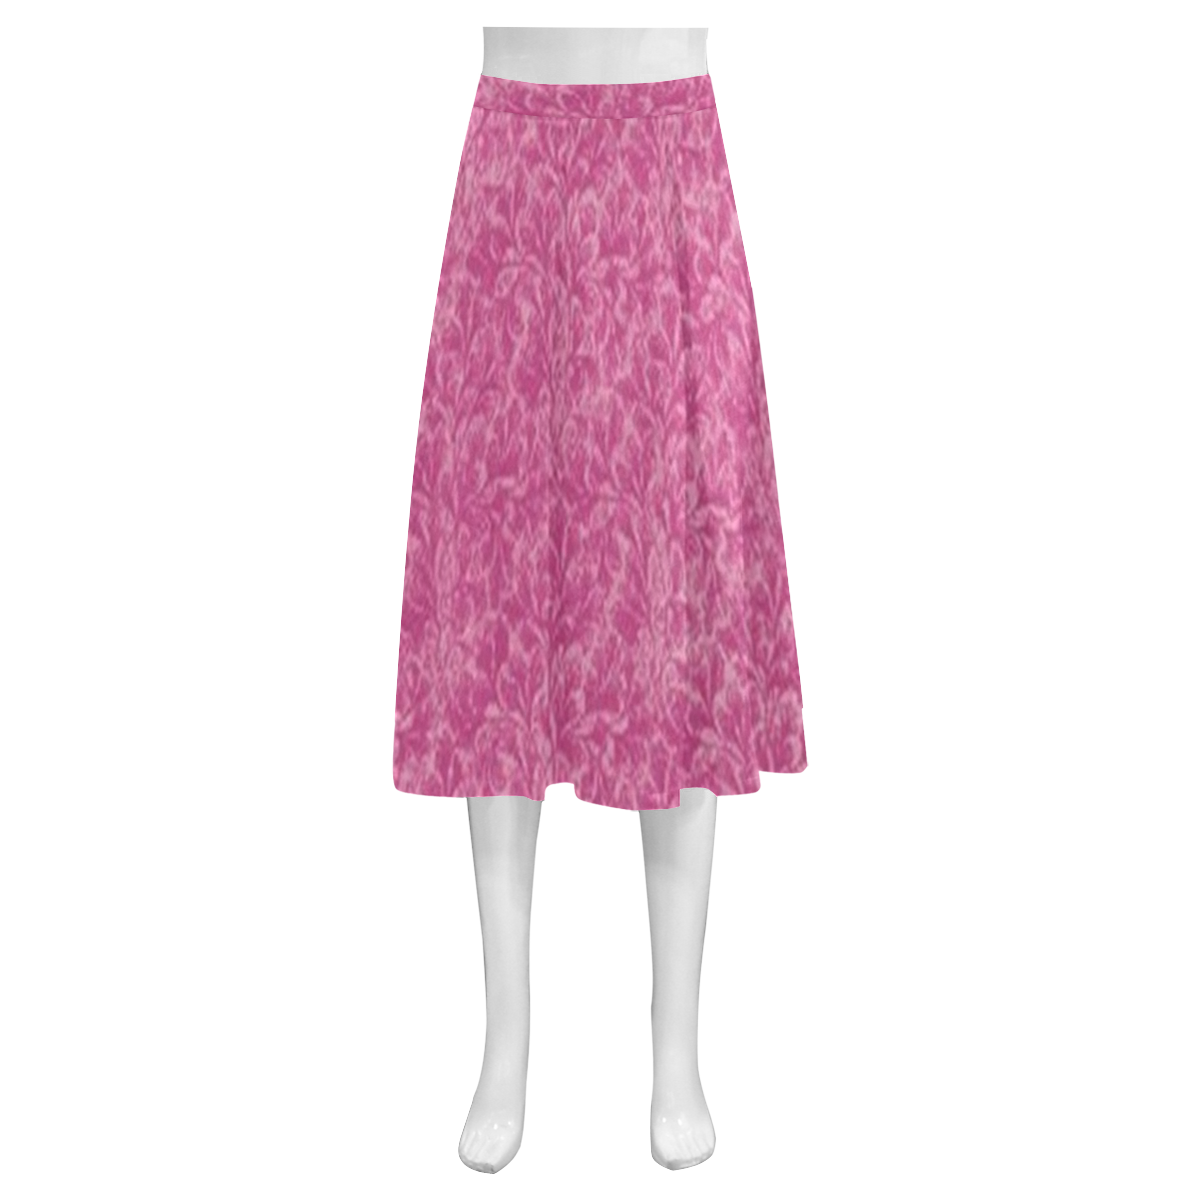 Vintage Floral Lace Leaf Fuchsia Pink Mnemosyne Women's Crepe Skirt (Model D16)